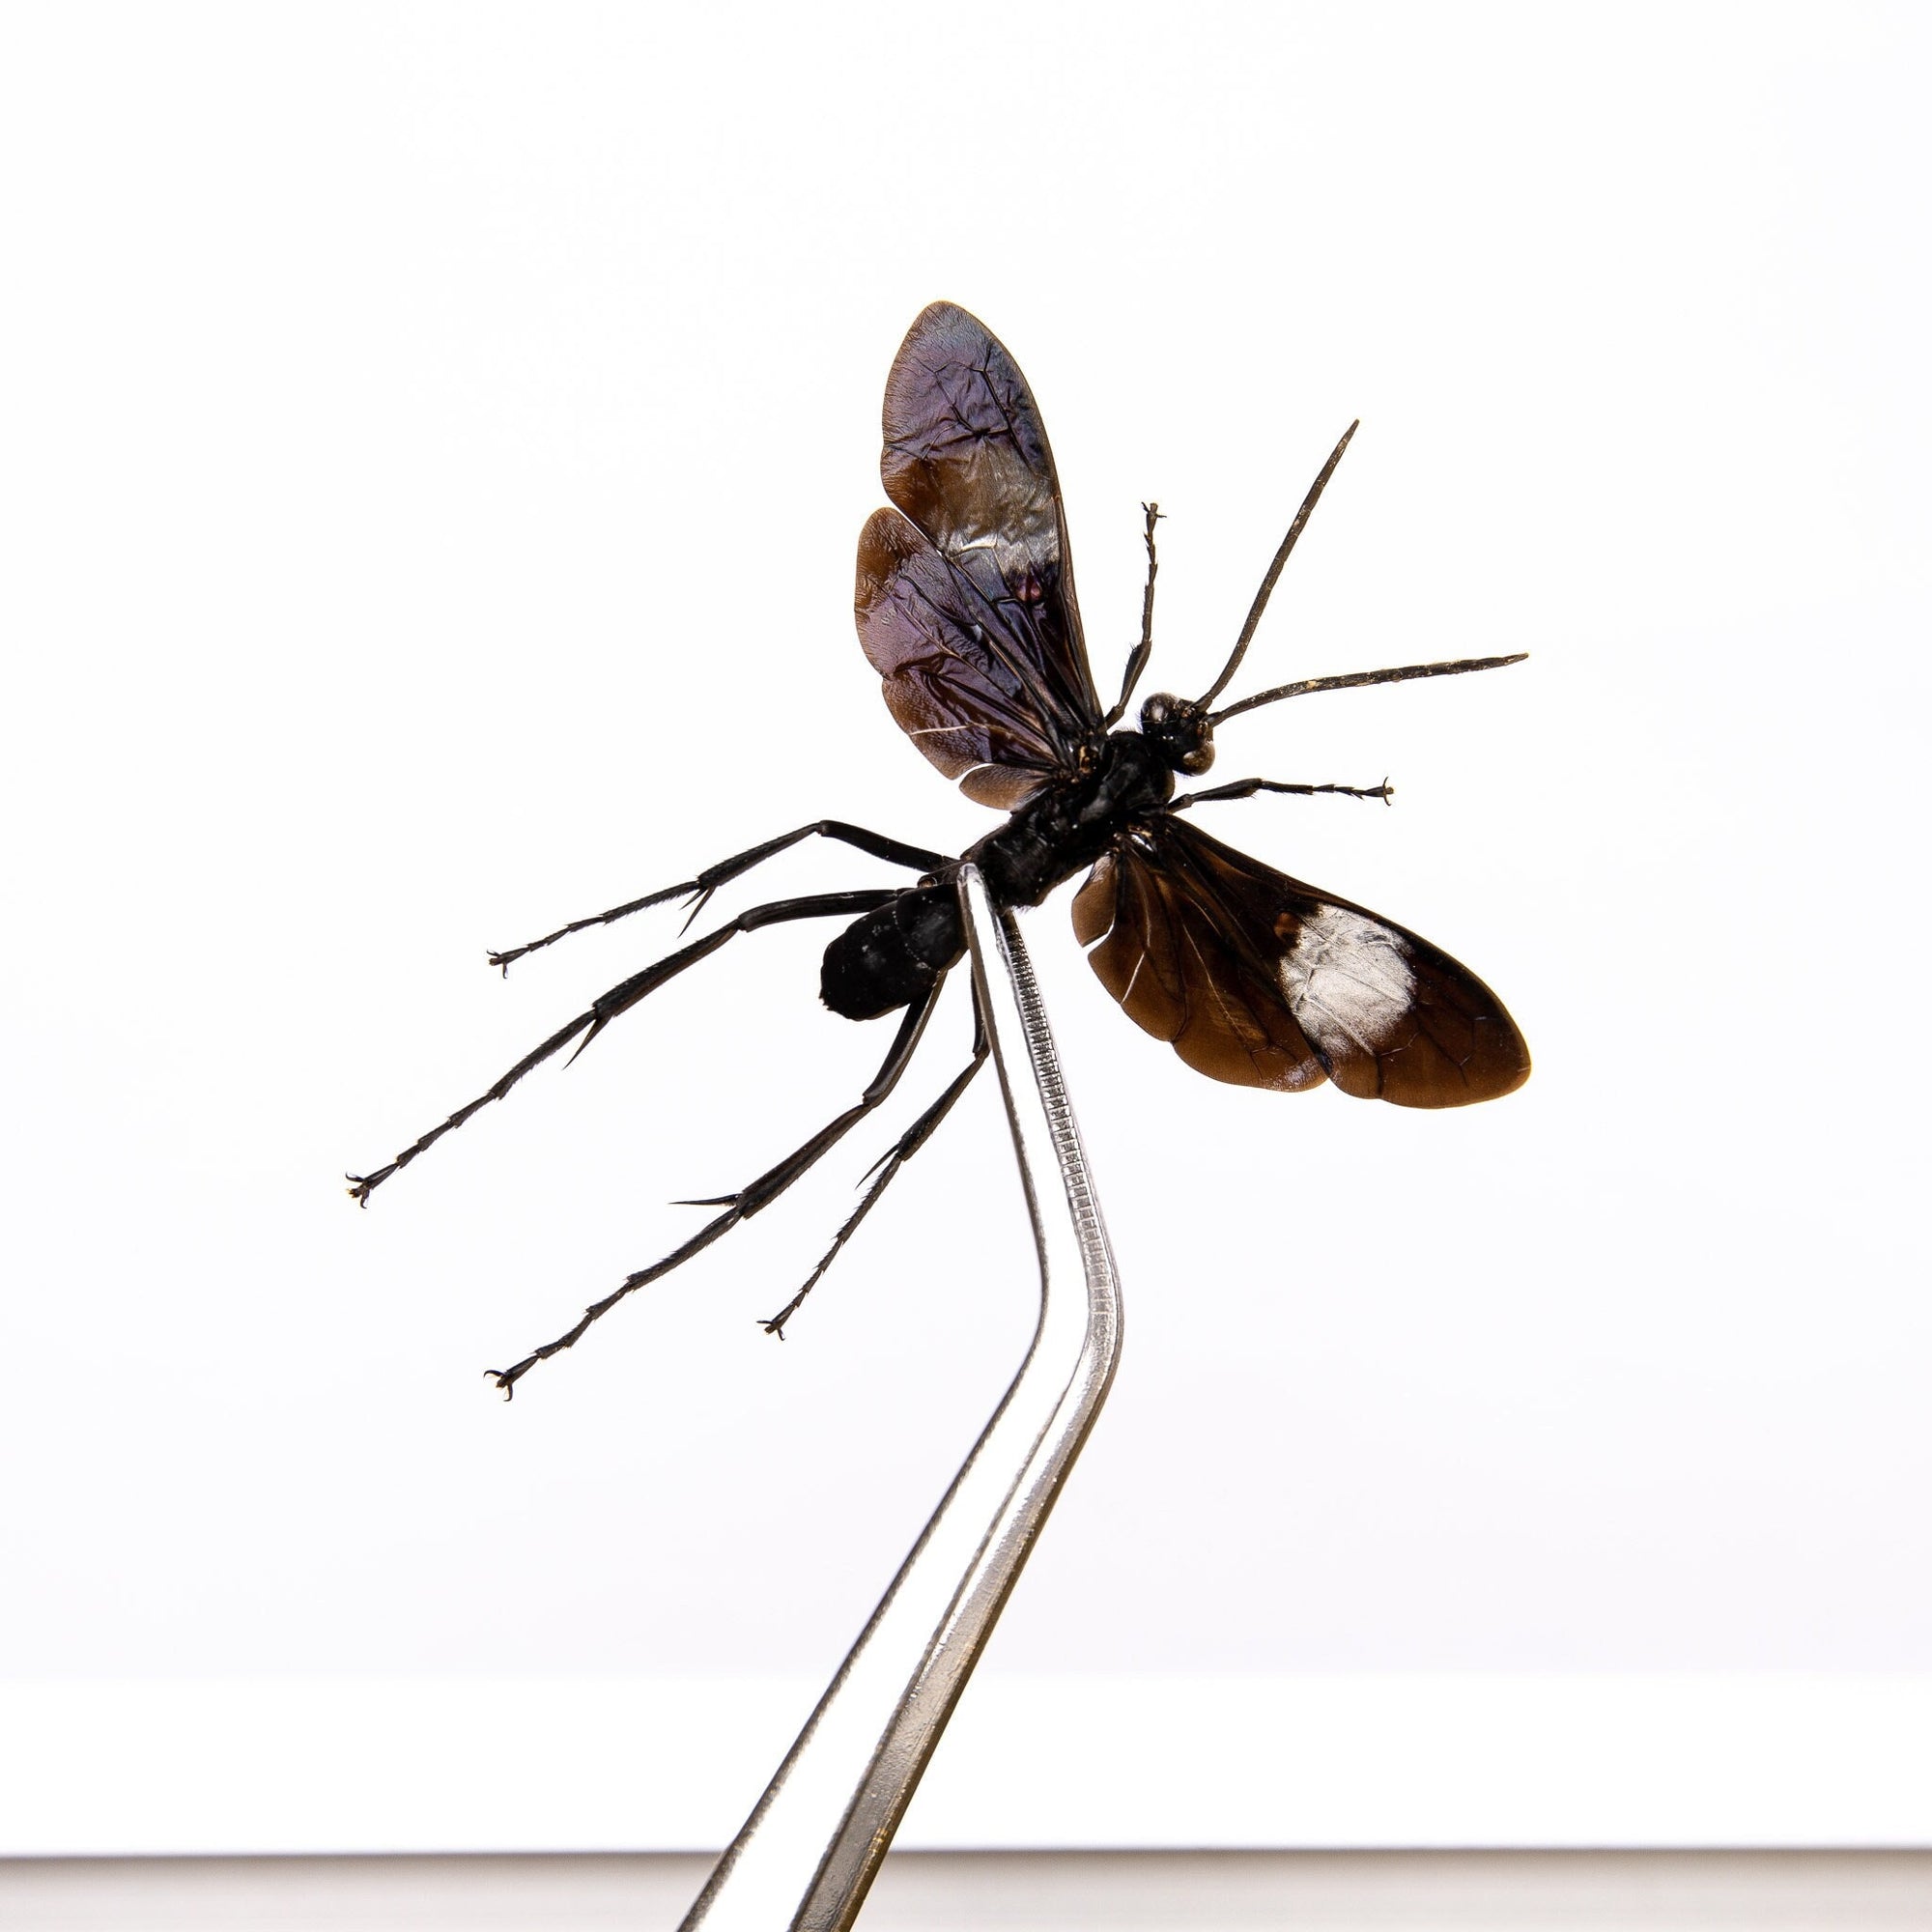 Tarantula Hawk Wasp 60-65mm A1- (Hemipepsis speculifer diselene) Real Entomology Specimen